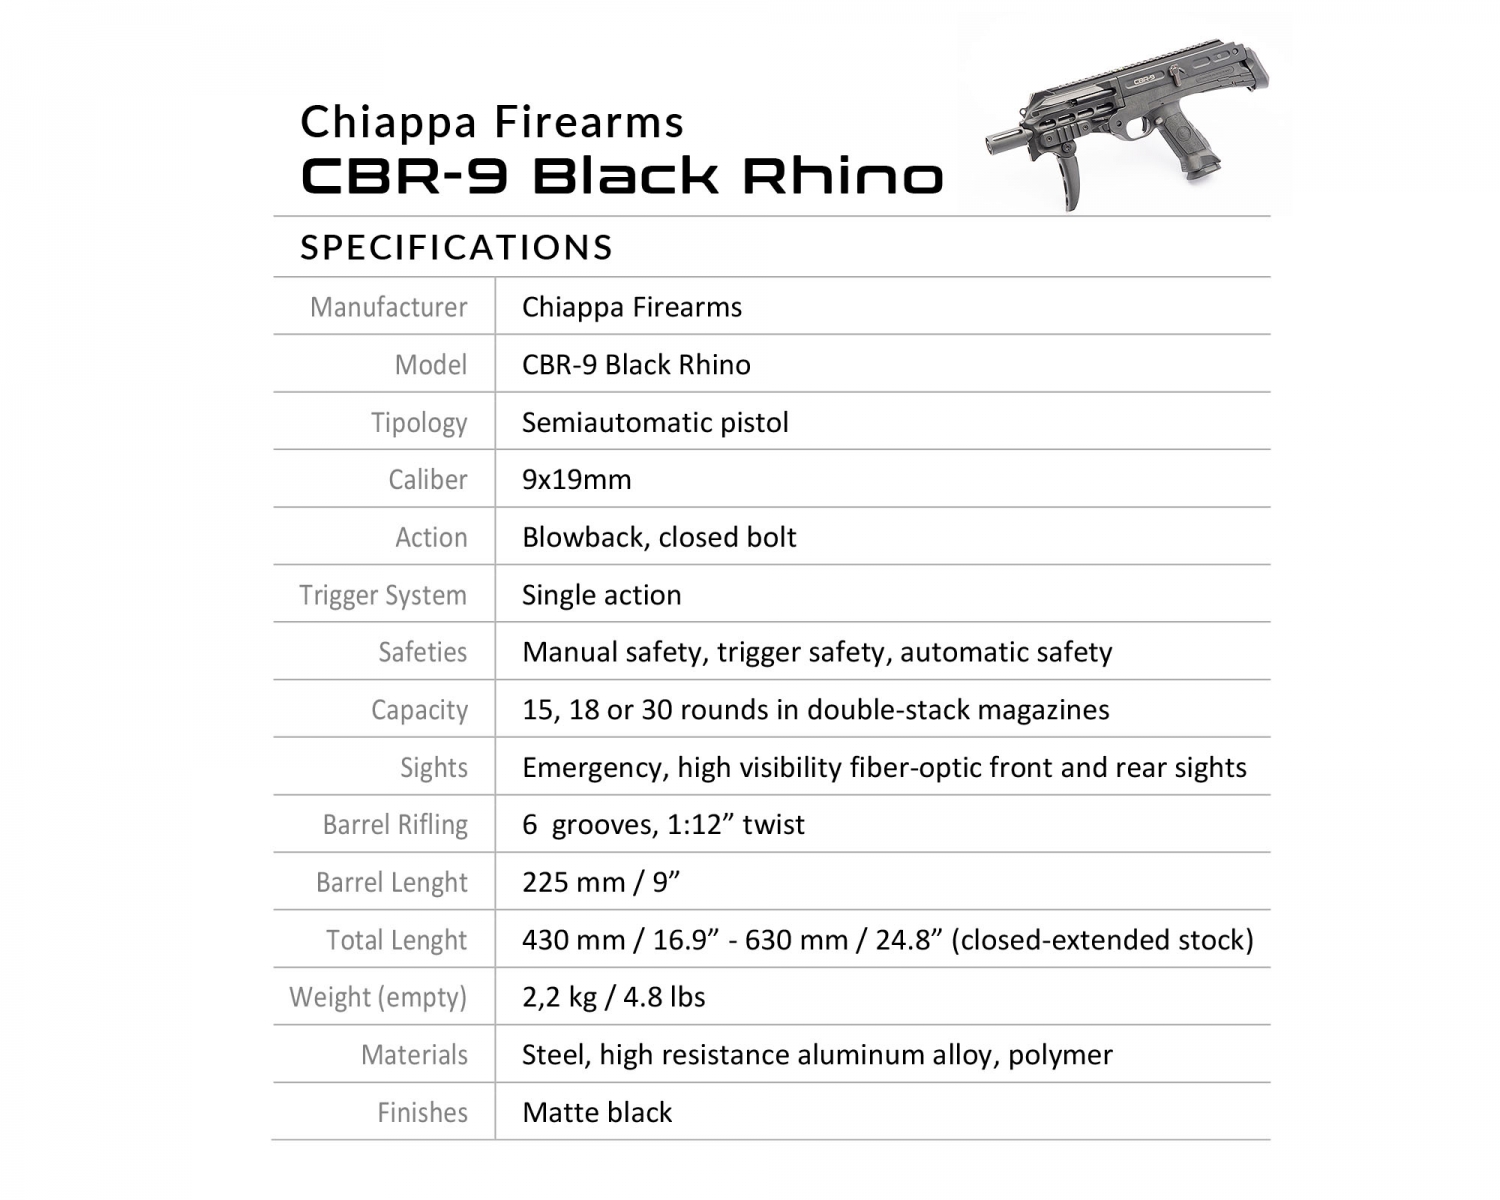 Chiappa Firearms CBR-9 Black Rhino pistol specifications